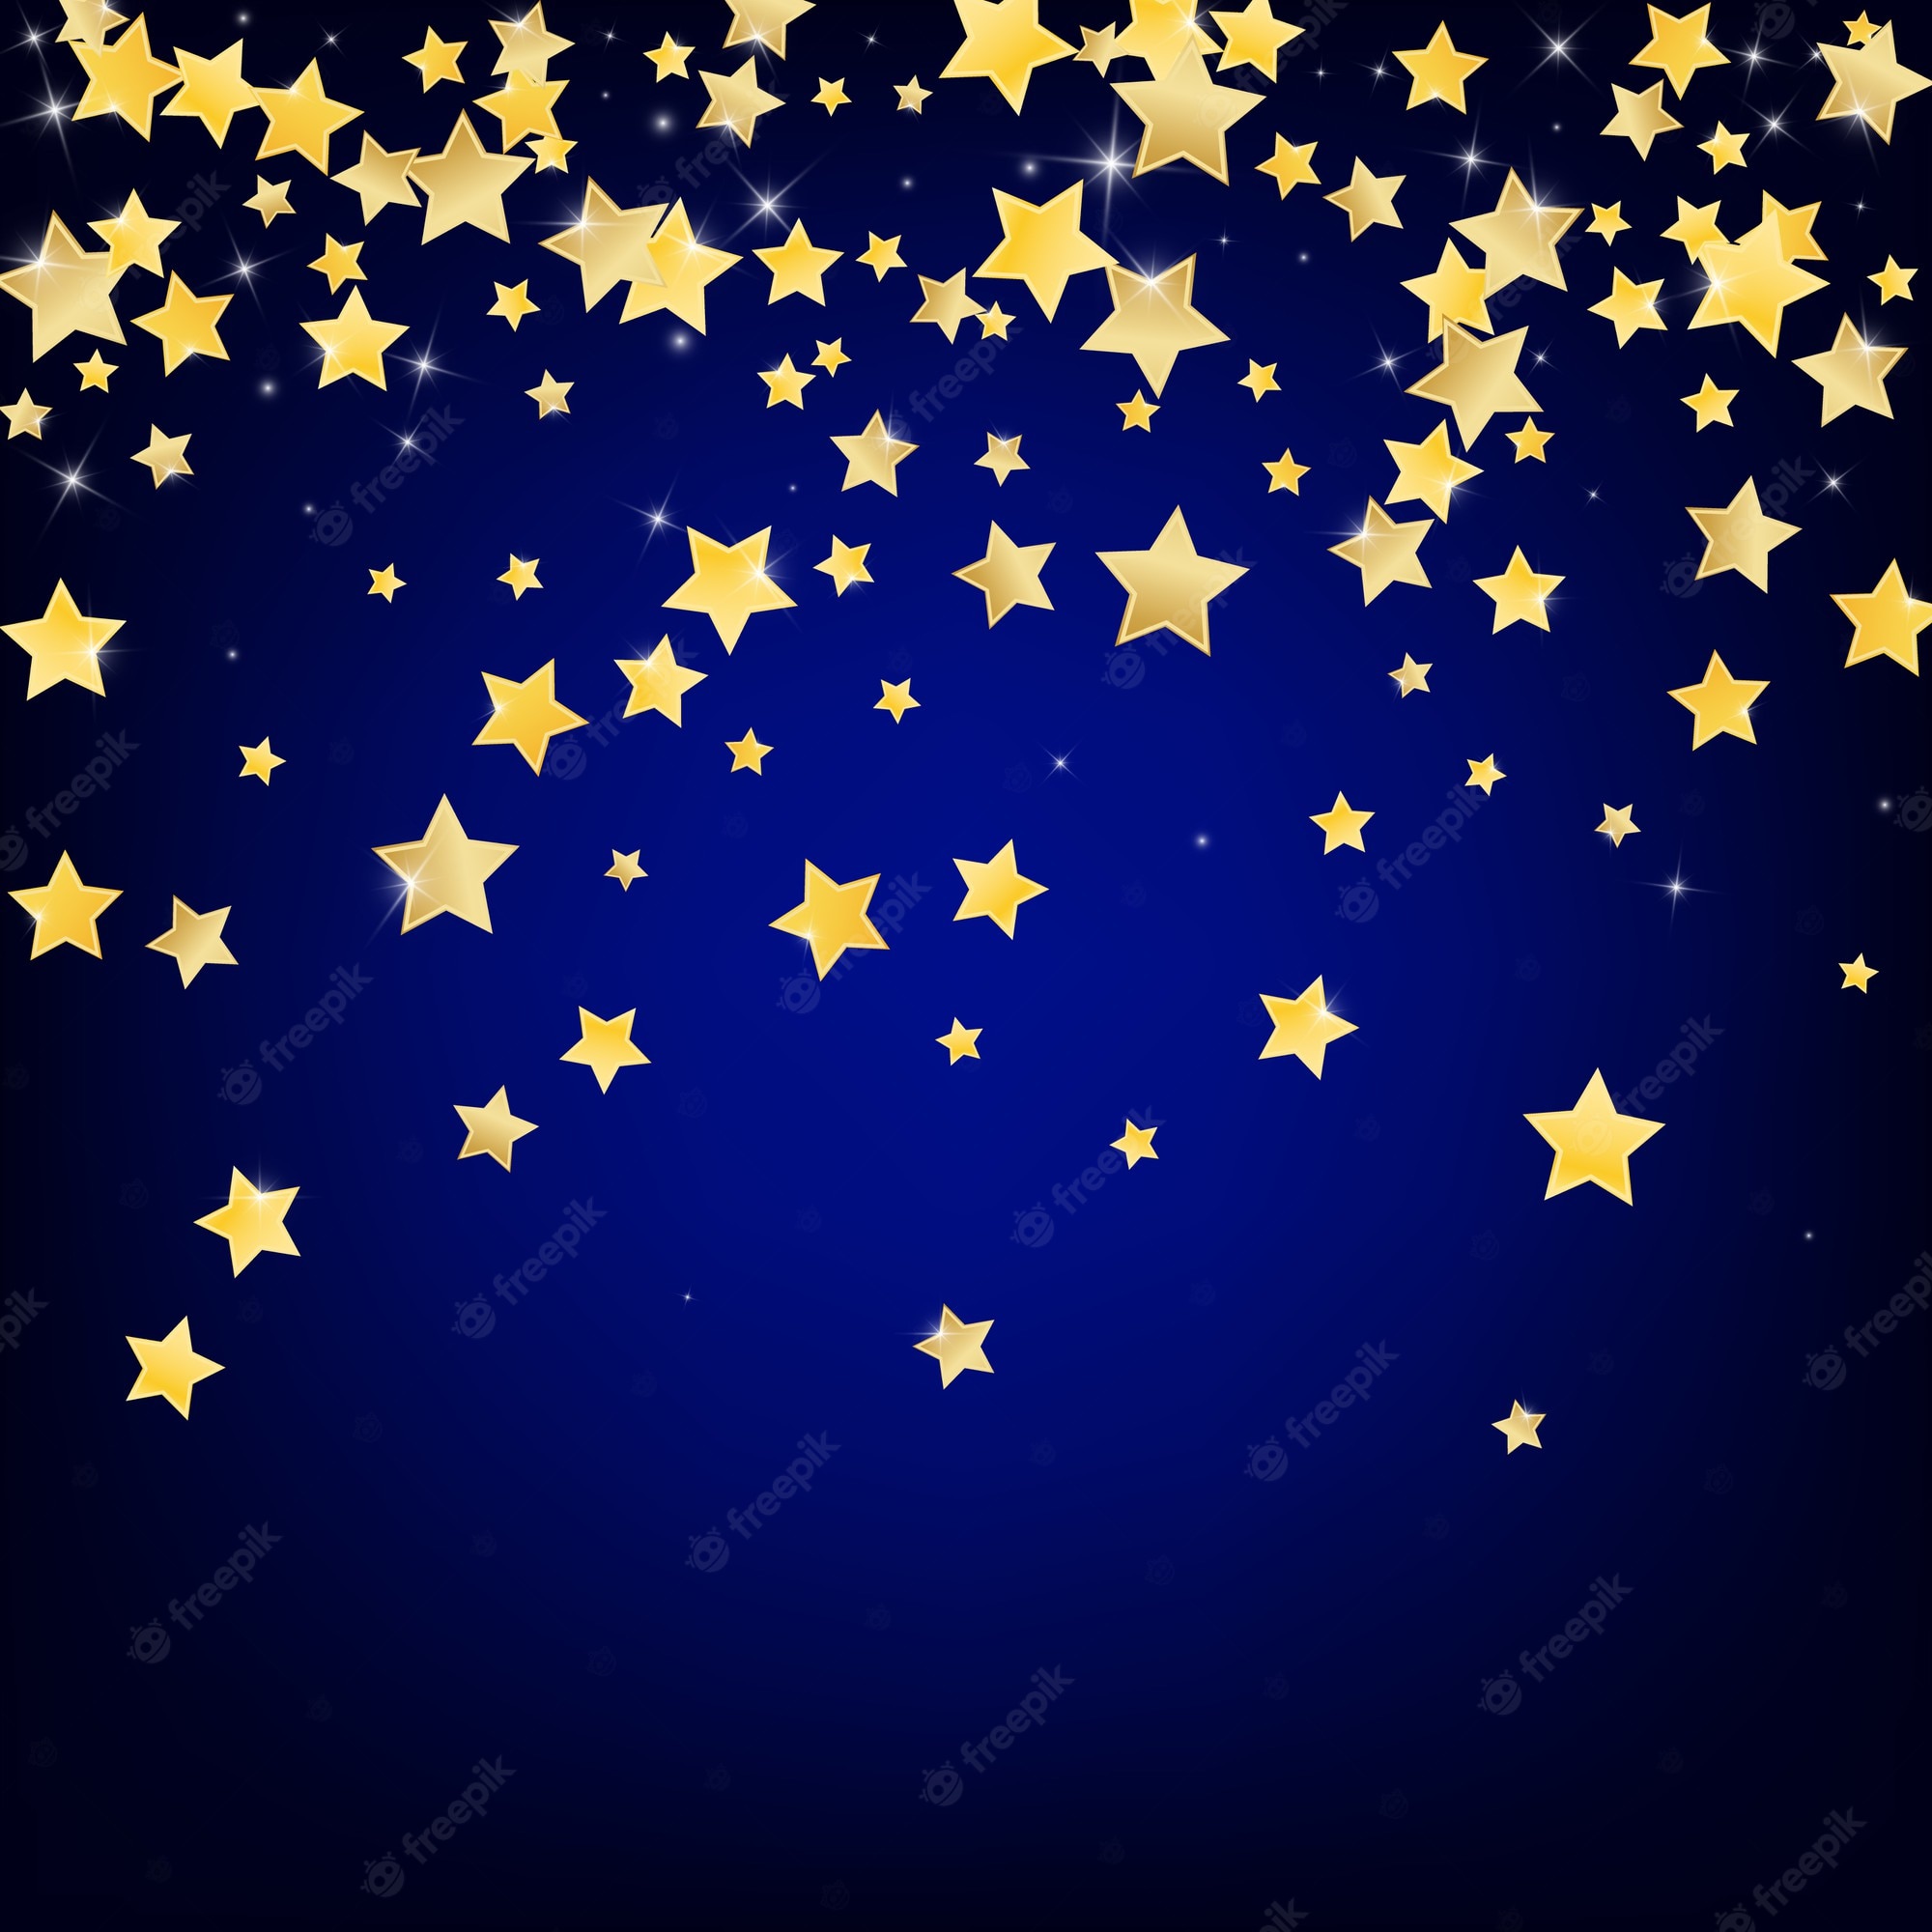 Premium Vector. Golden stars background. stars confetti wallpaper